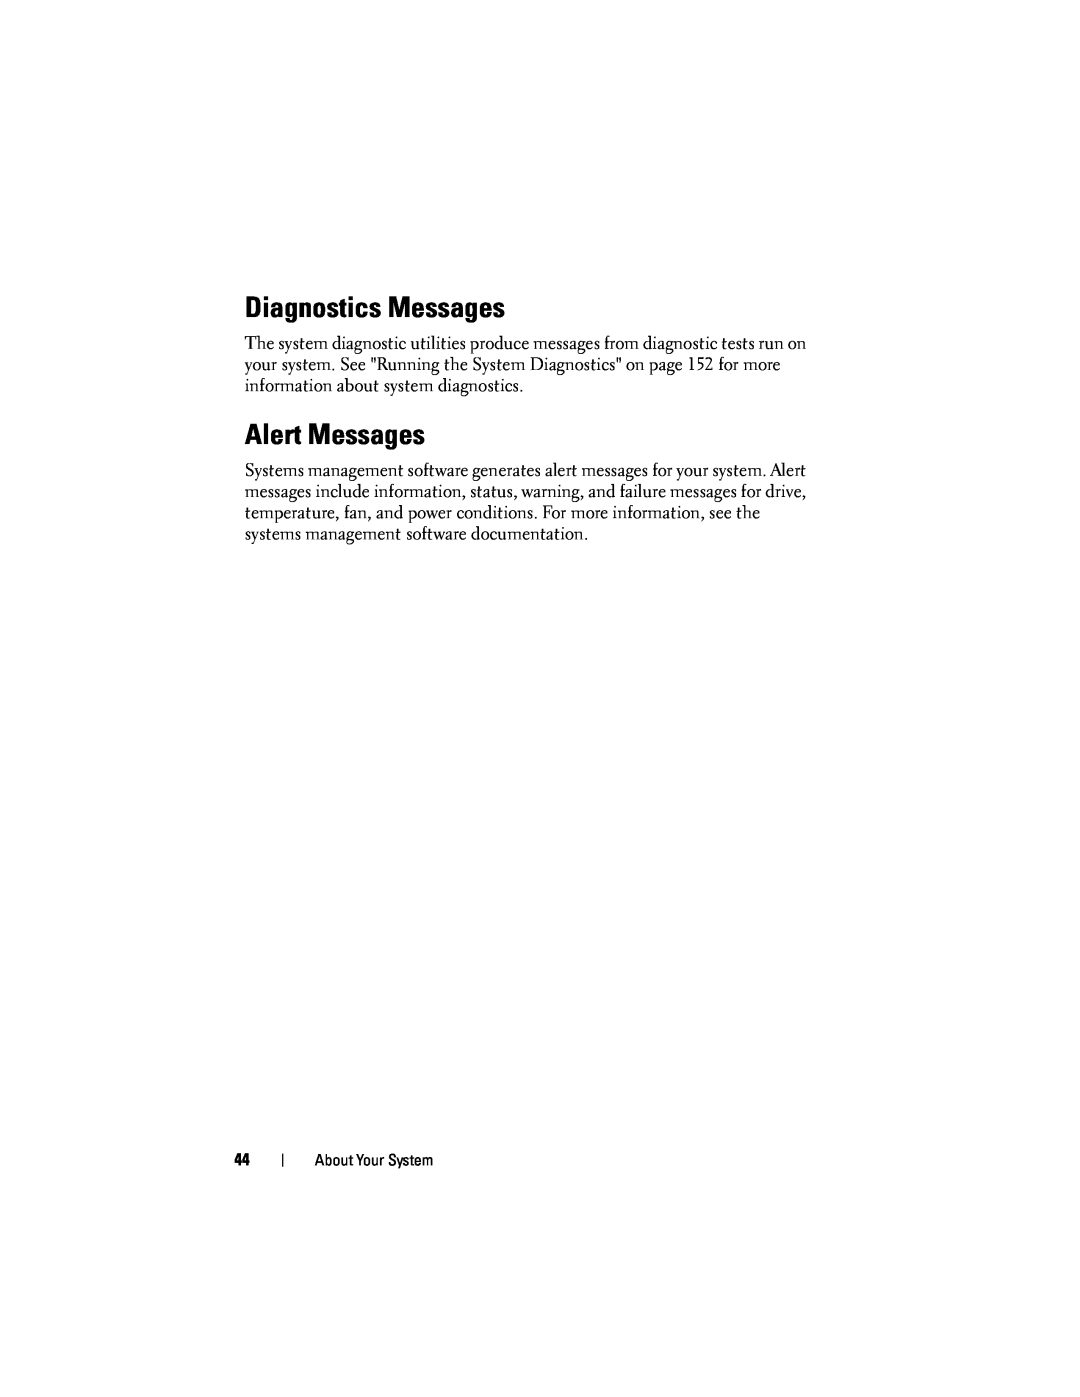 Dell R300 owner manual Diagnostics Messages, Alert Messages 